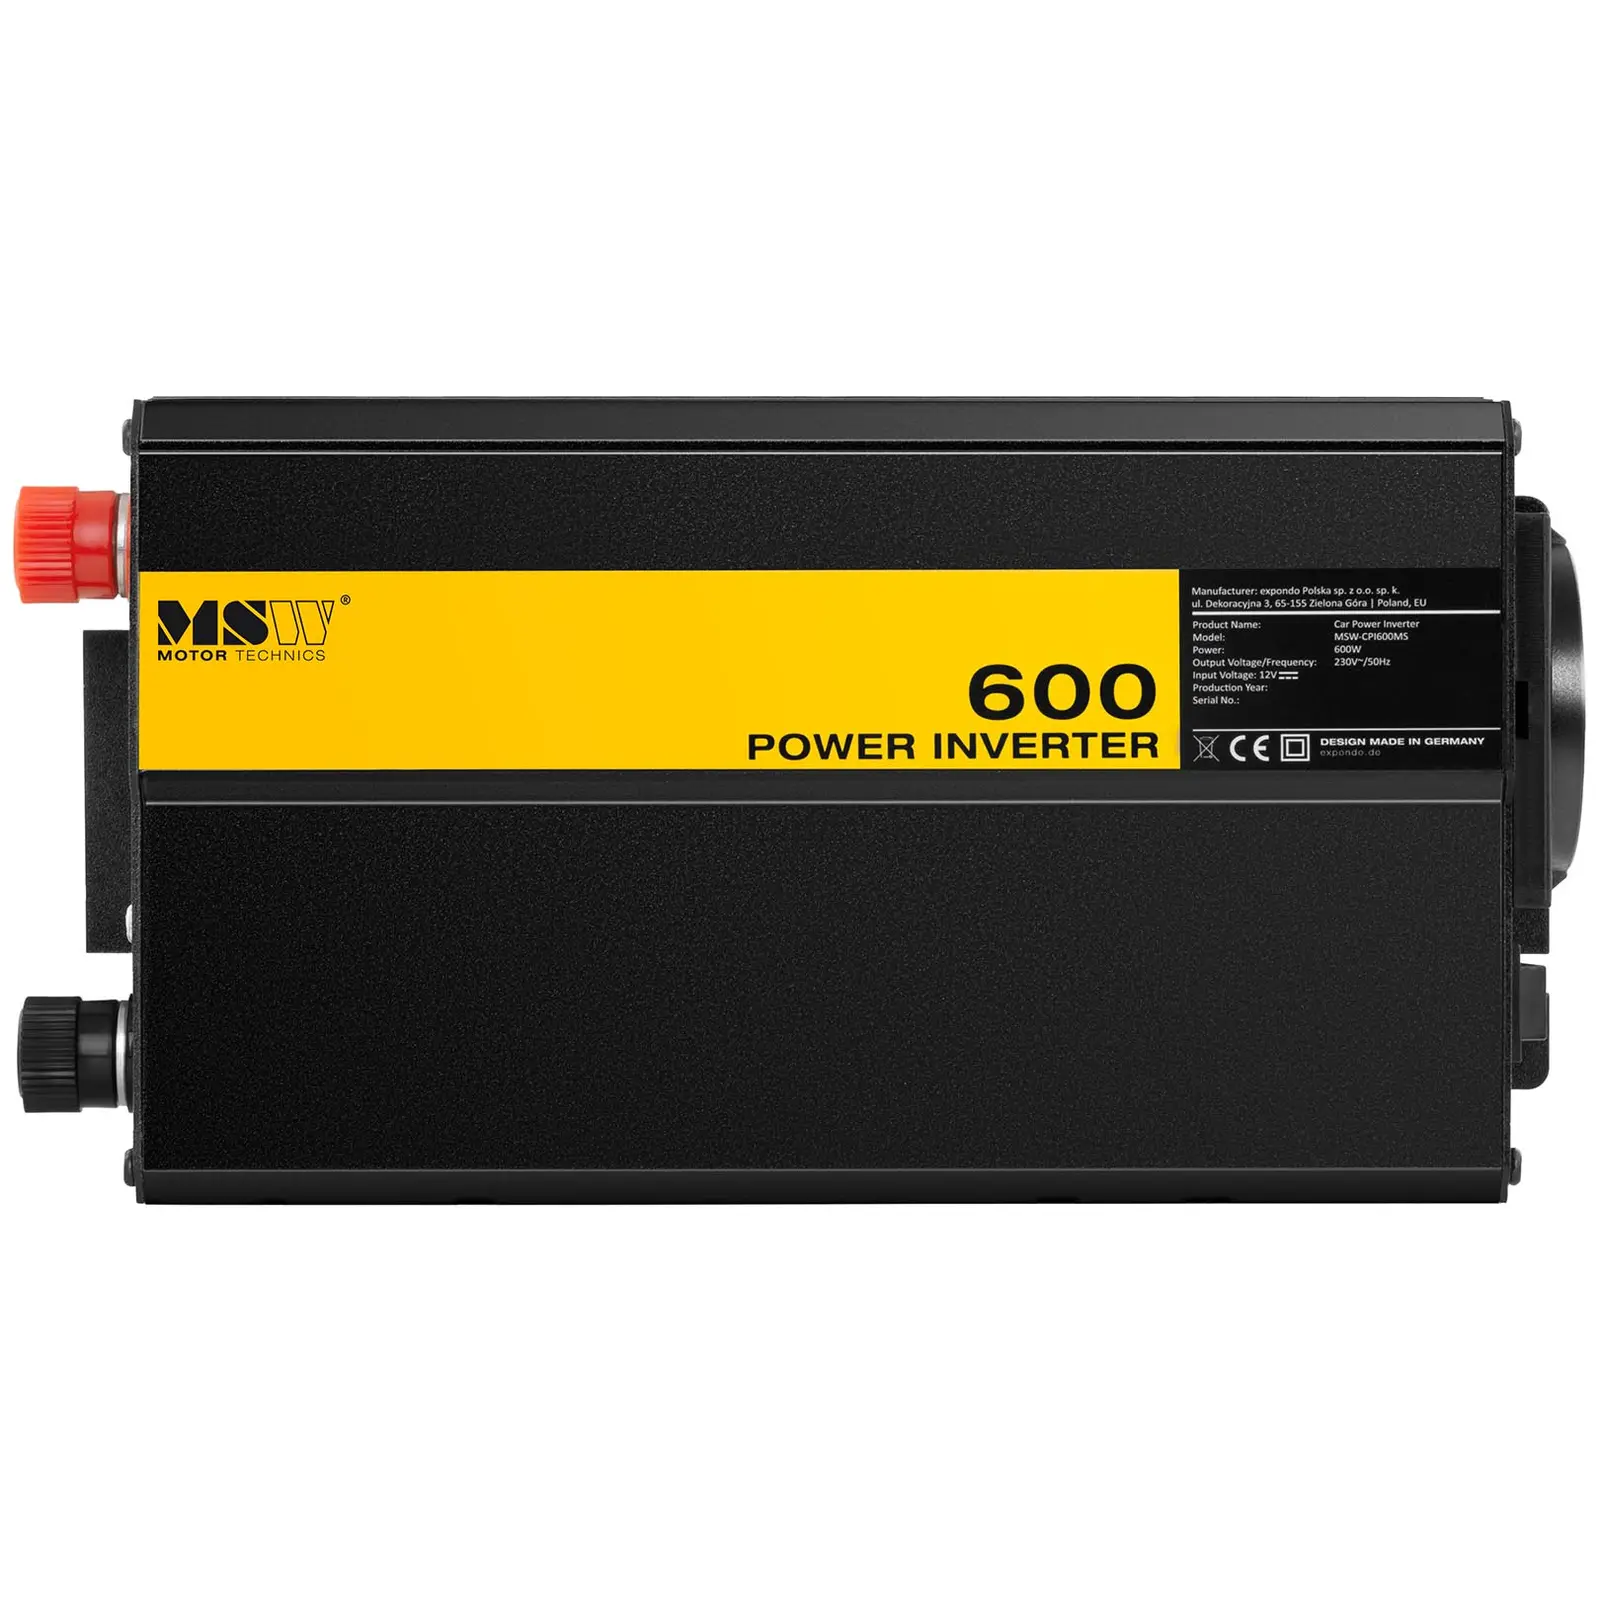 Power inverter - 600 W